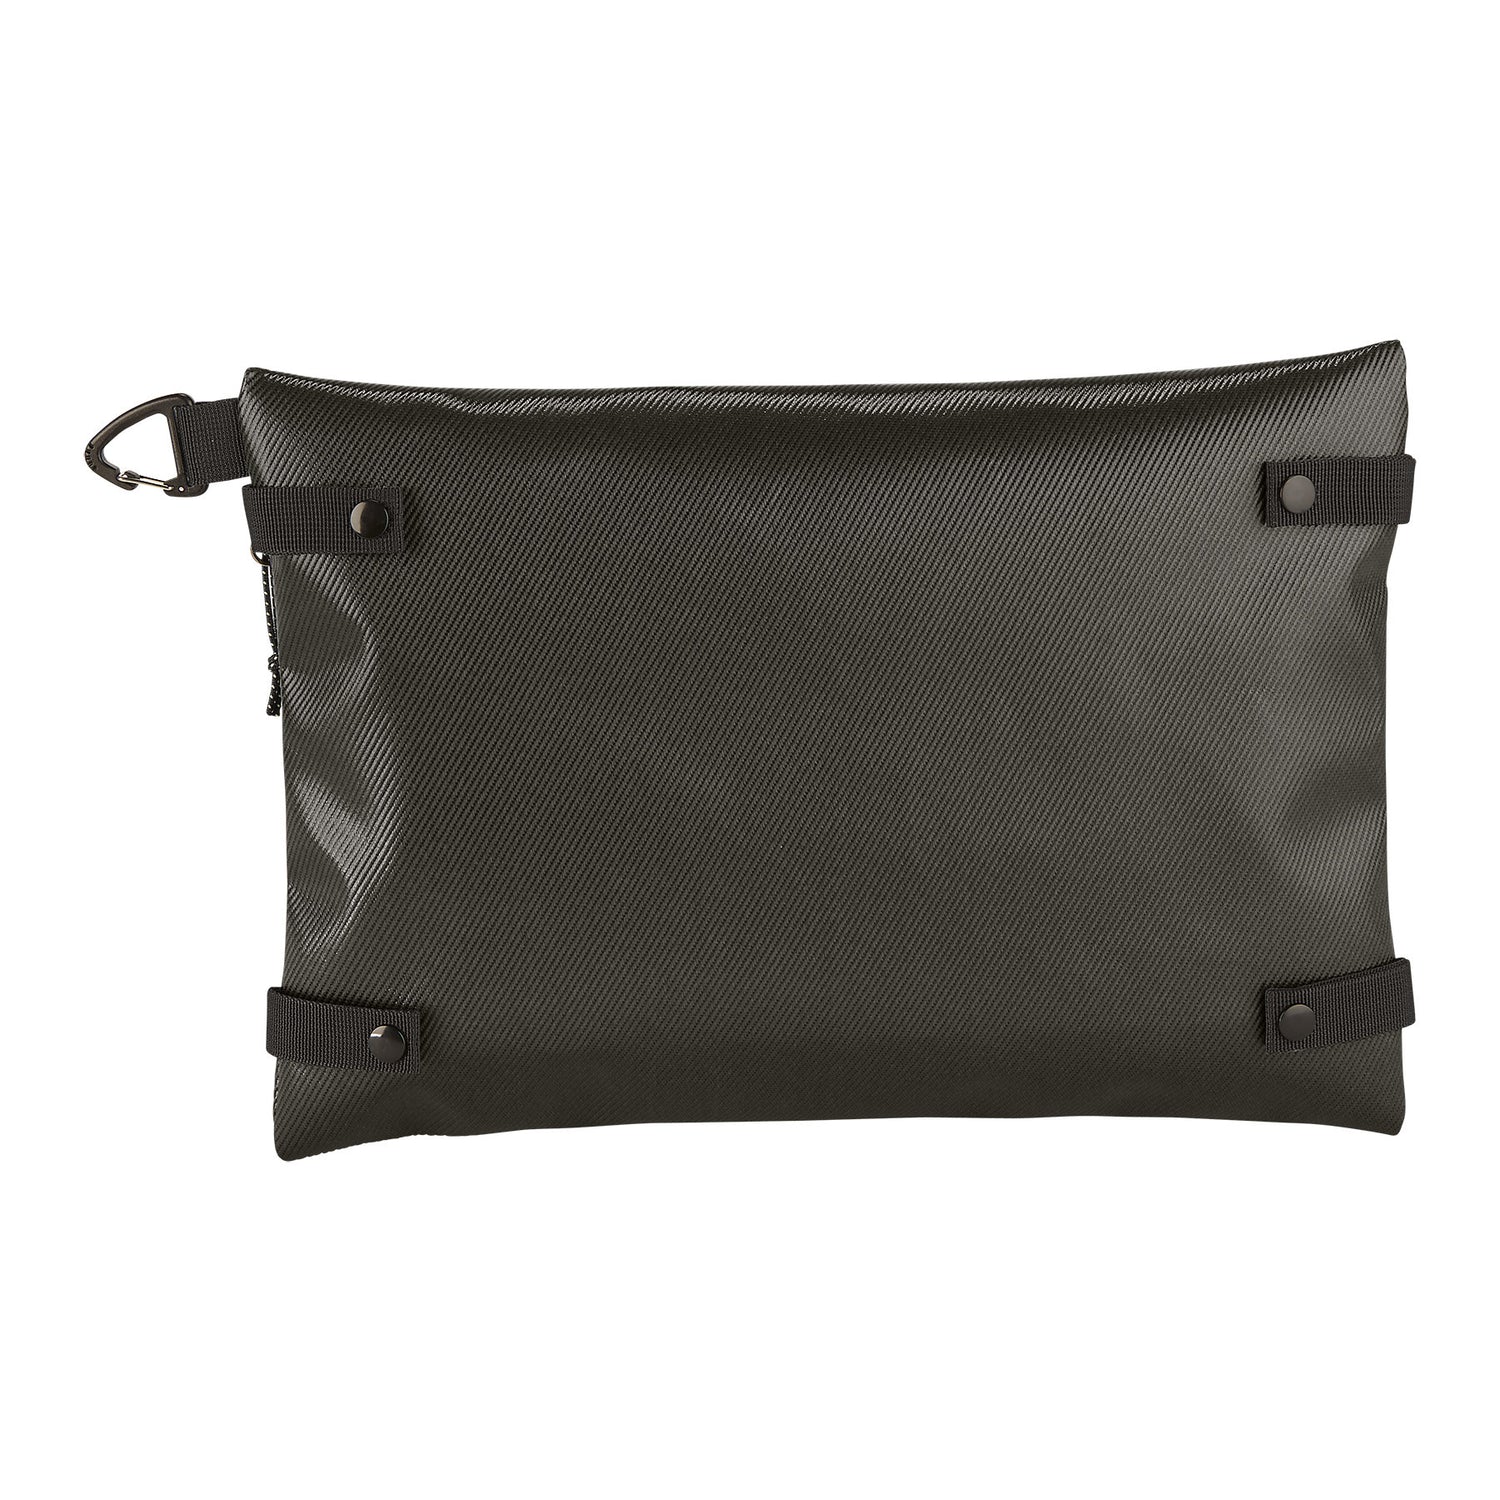 Designer Ladies Fashion Bags Handbags Luxury Clutches Shoulder Coin Purse  Wallet Messenger Bag Cross Body Bag From Junzhuang, $83.1 | DHgate.Com